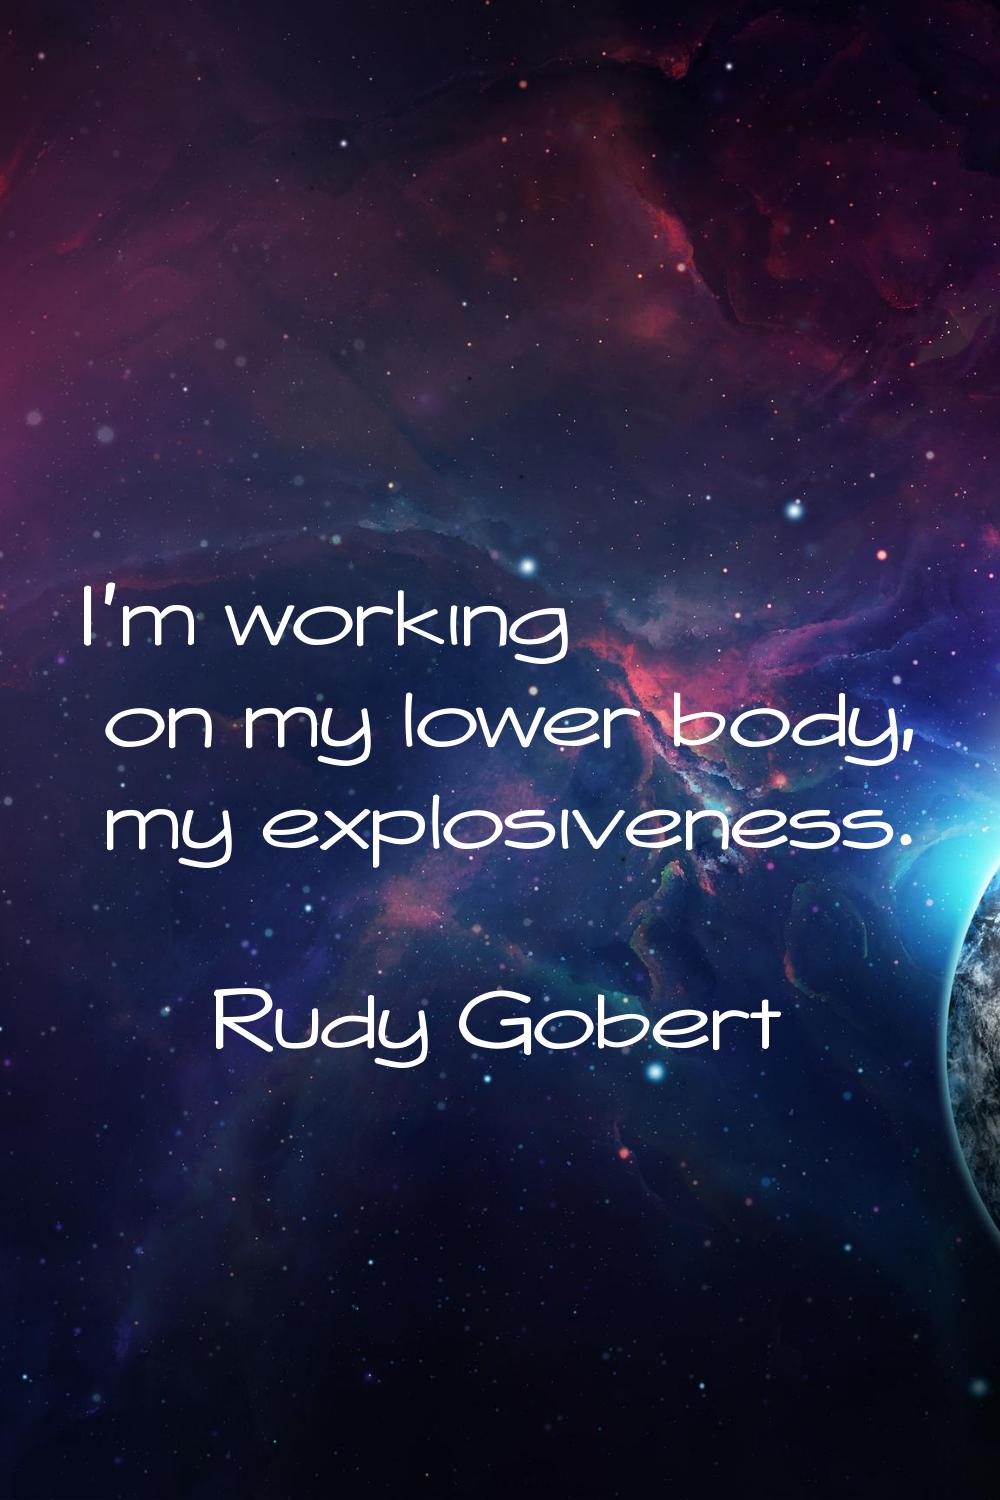 I'm working on my lower body, my explosiveness.